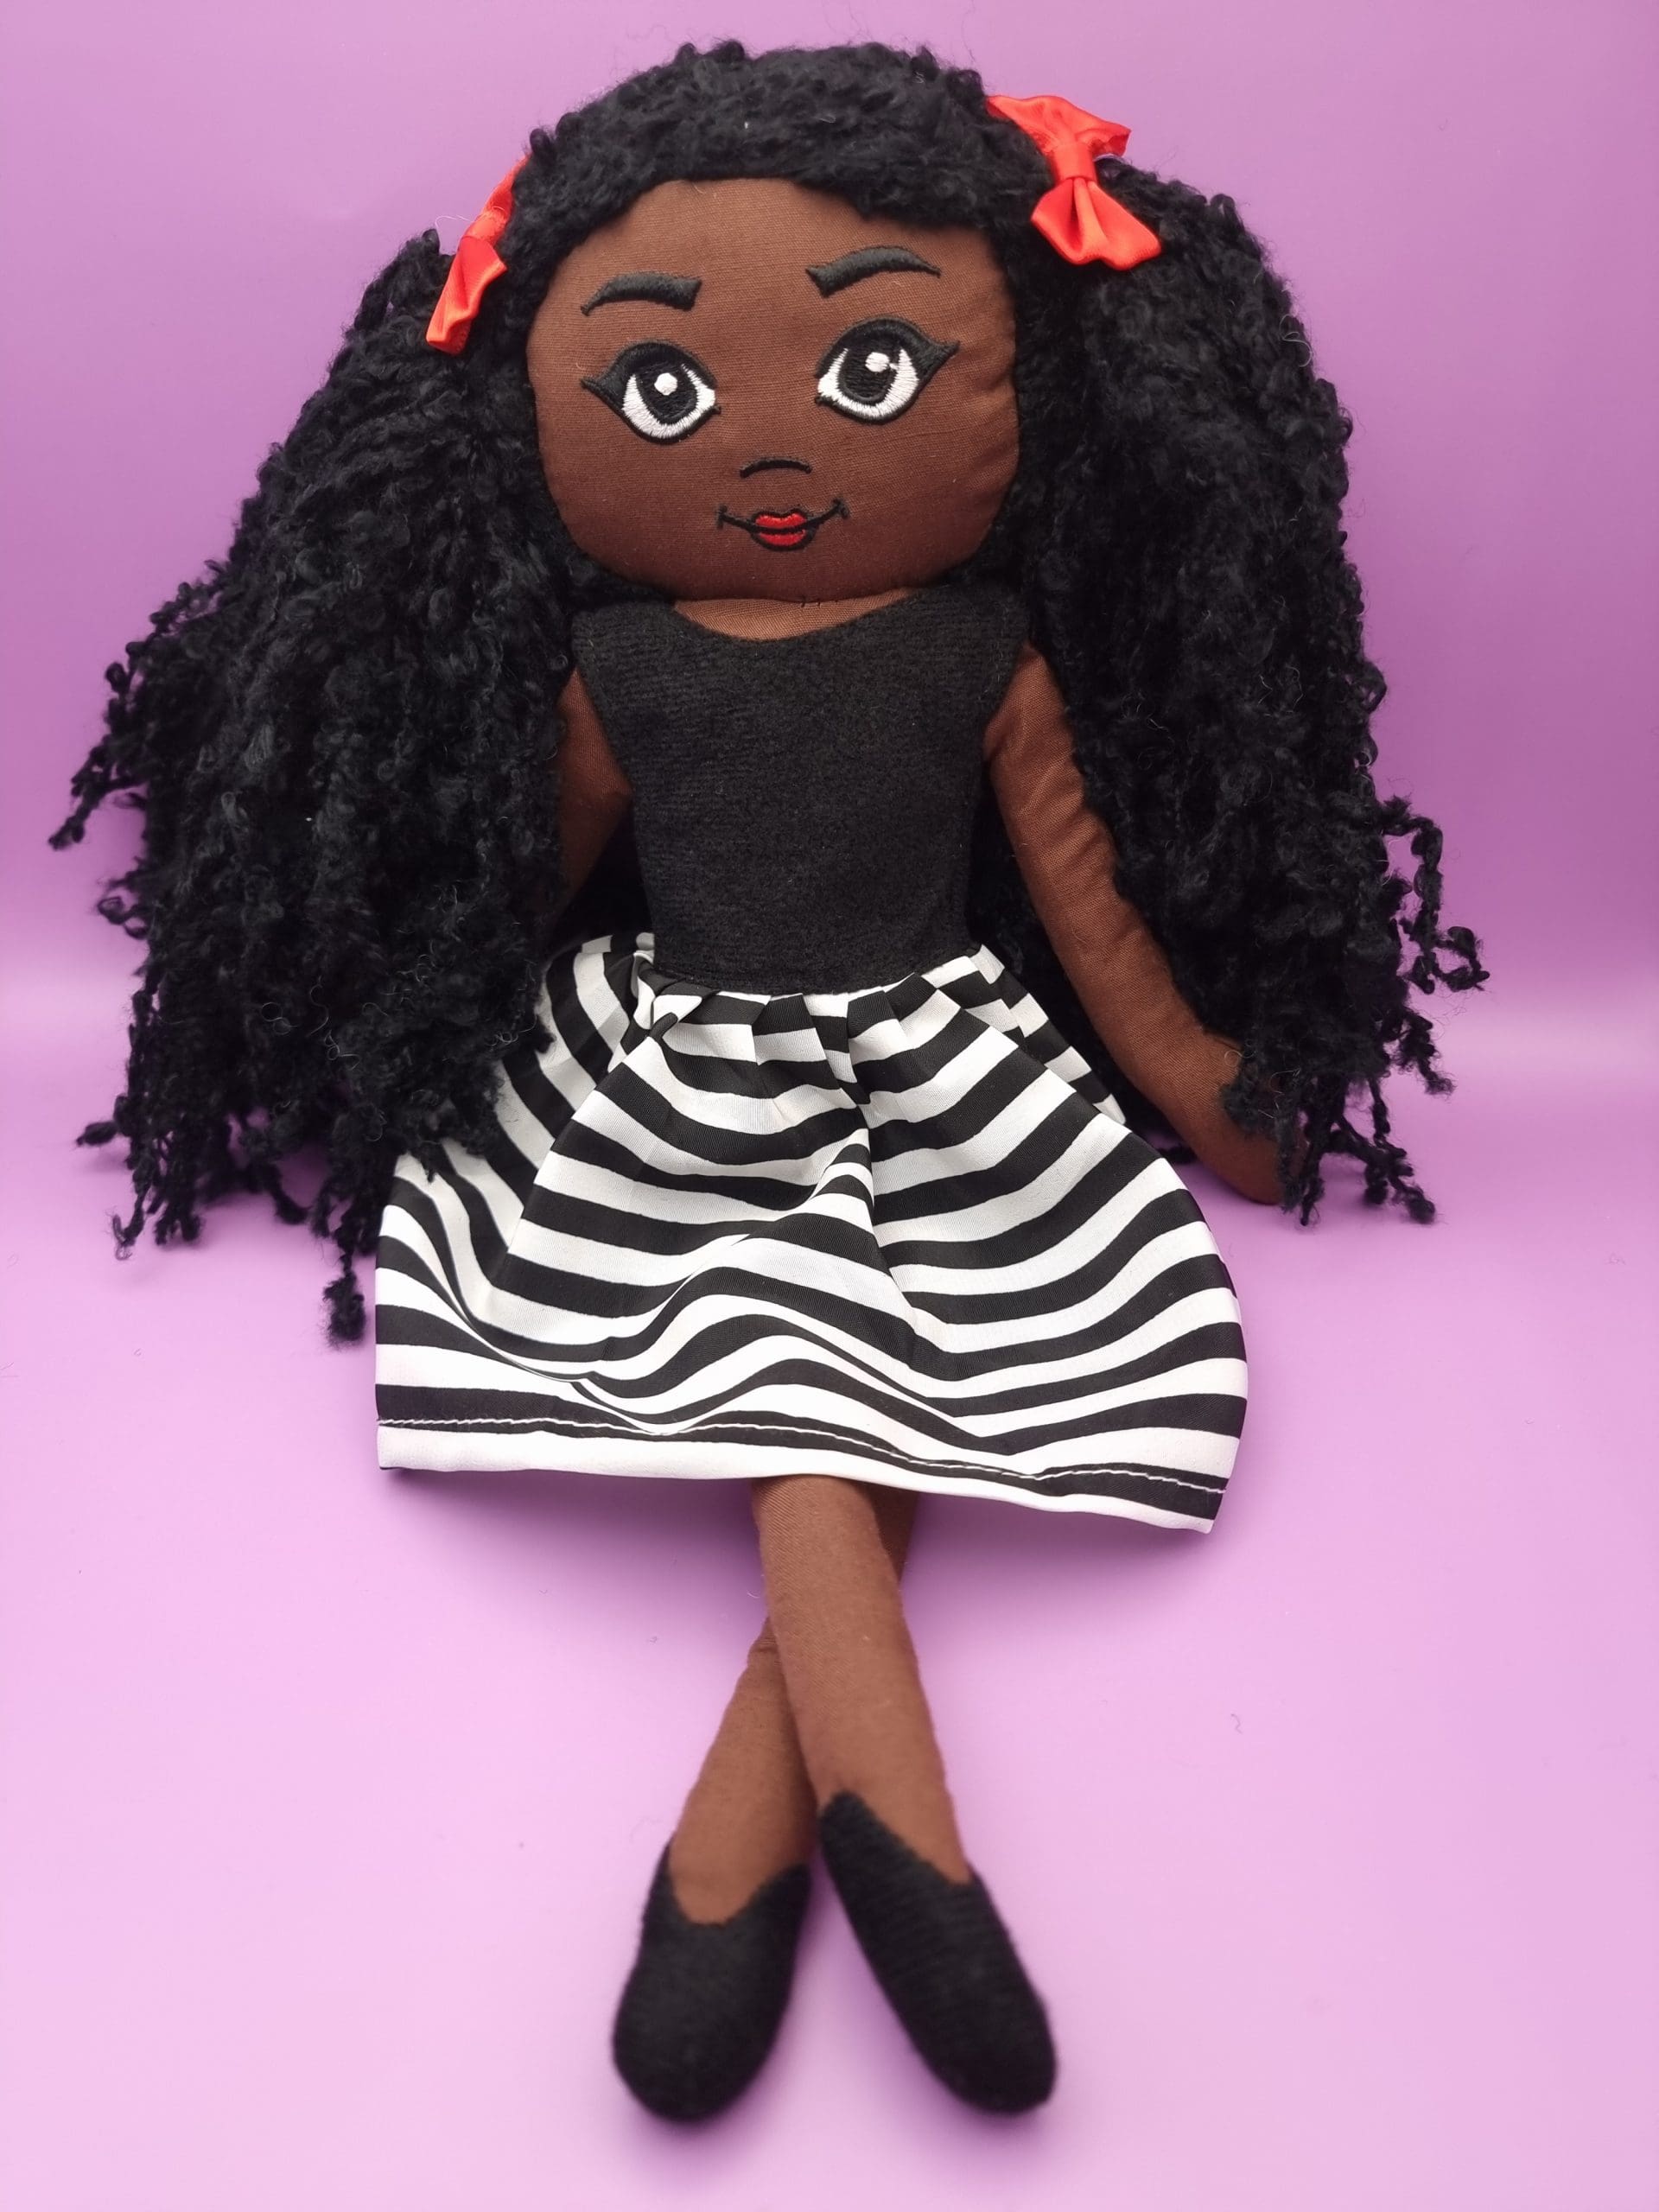 An Amaris and Chaya black girl doll